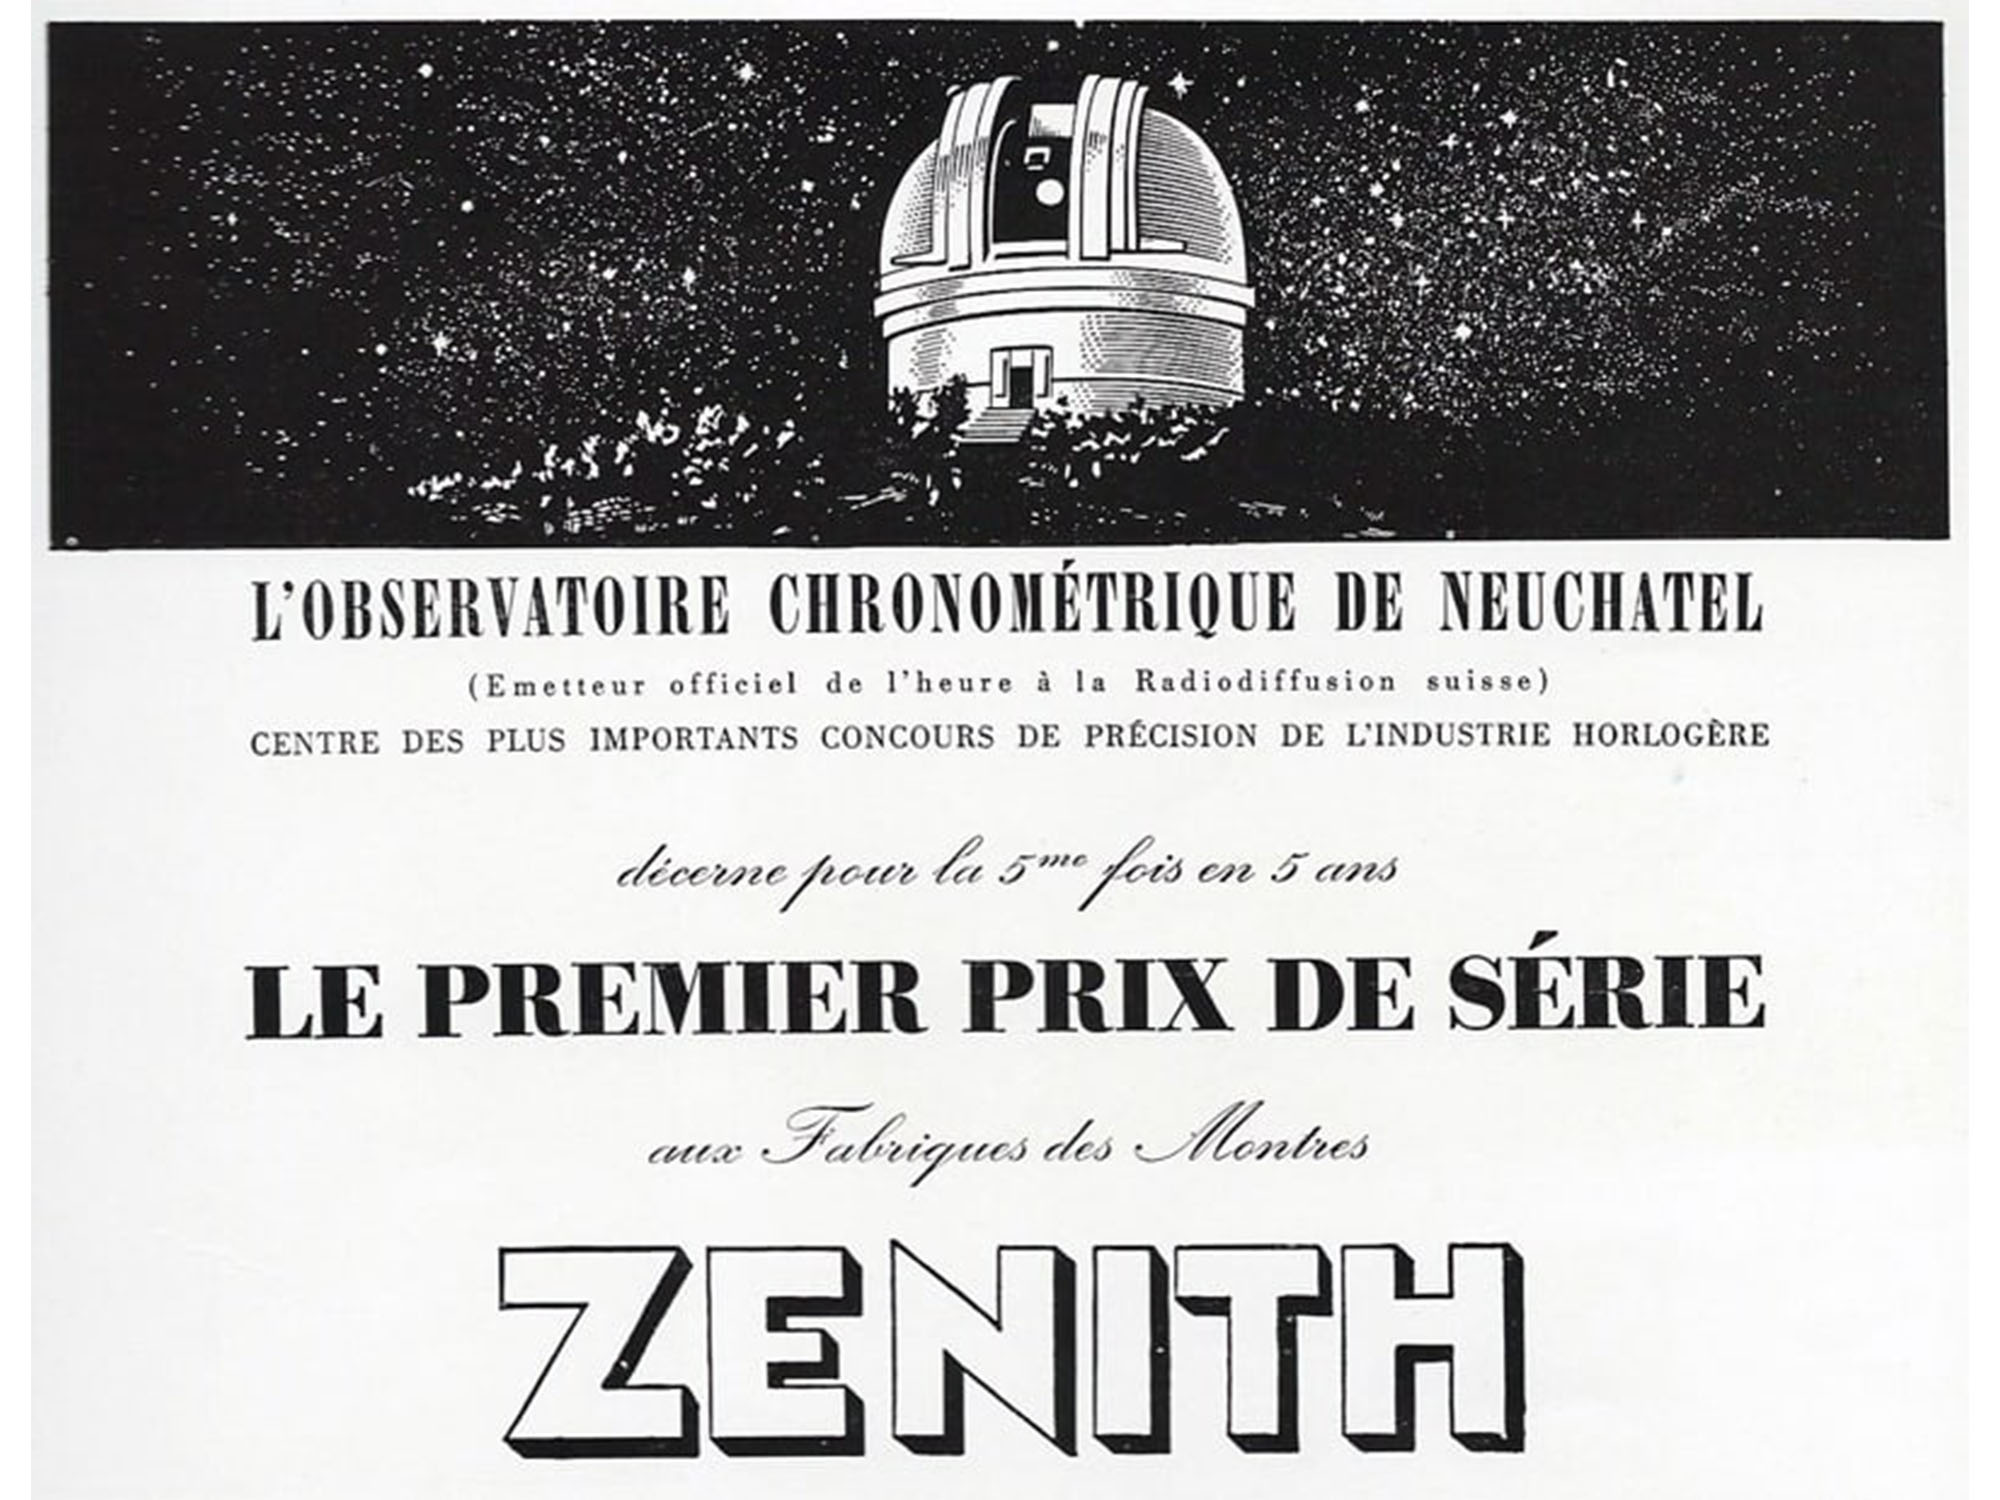 Zenith Chronometry Award